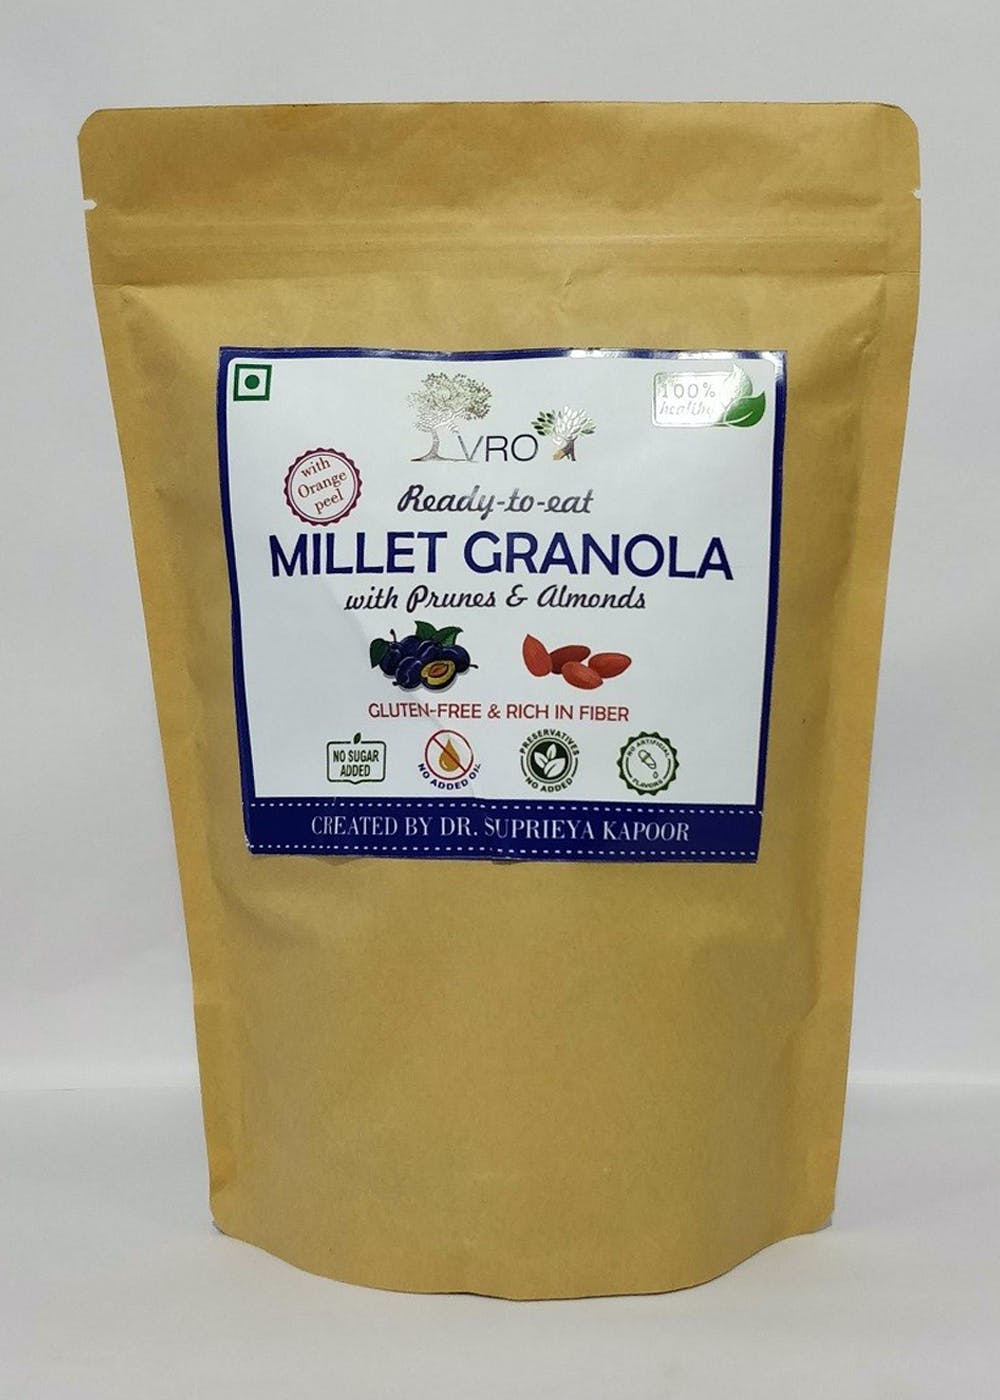 Millet Granola with Prunes & Almonds